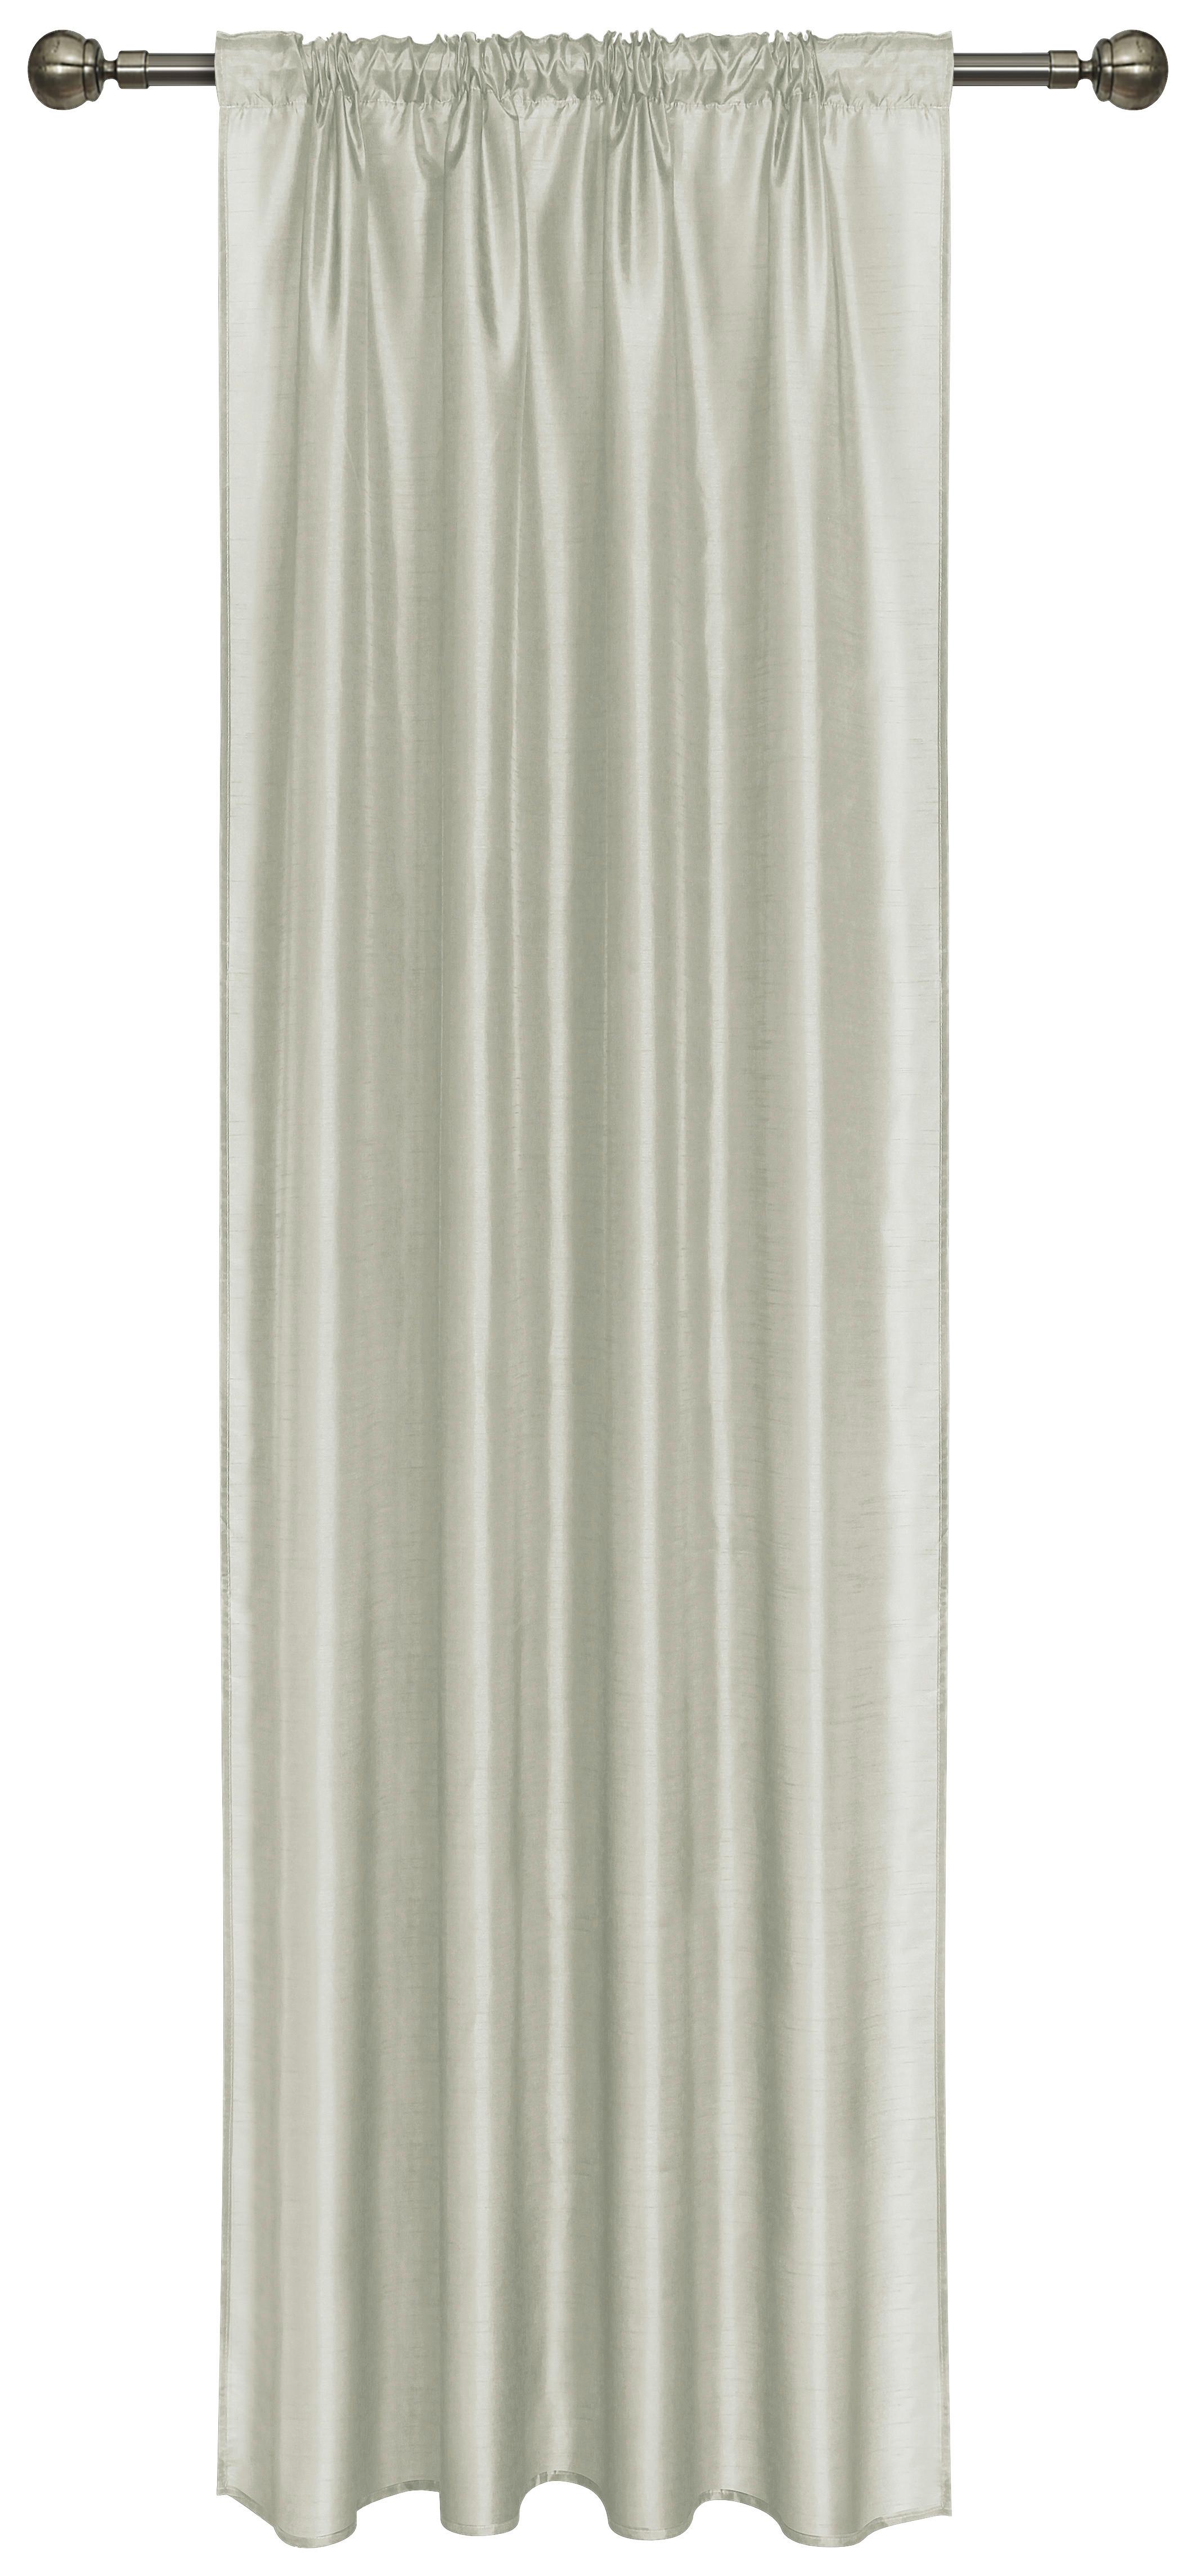 Vorhang mit Multifunktionsband Ulla 140x245 cm Beige - Beige, ROMANTIK / LANDHAUS, Textil (140/245cm) - James Wood